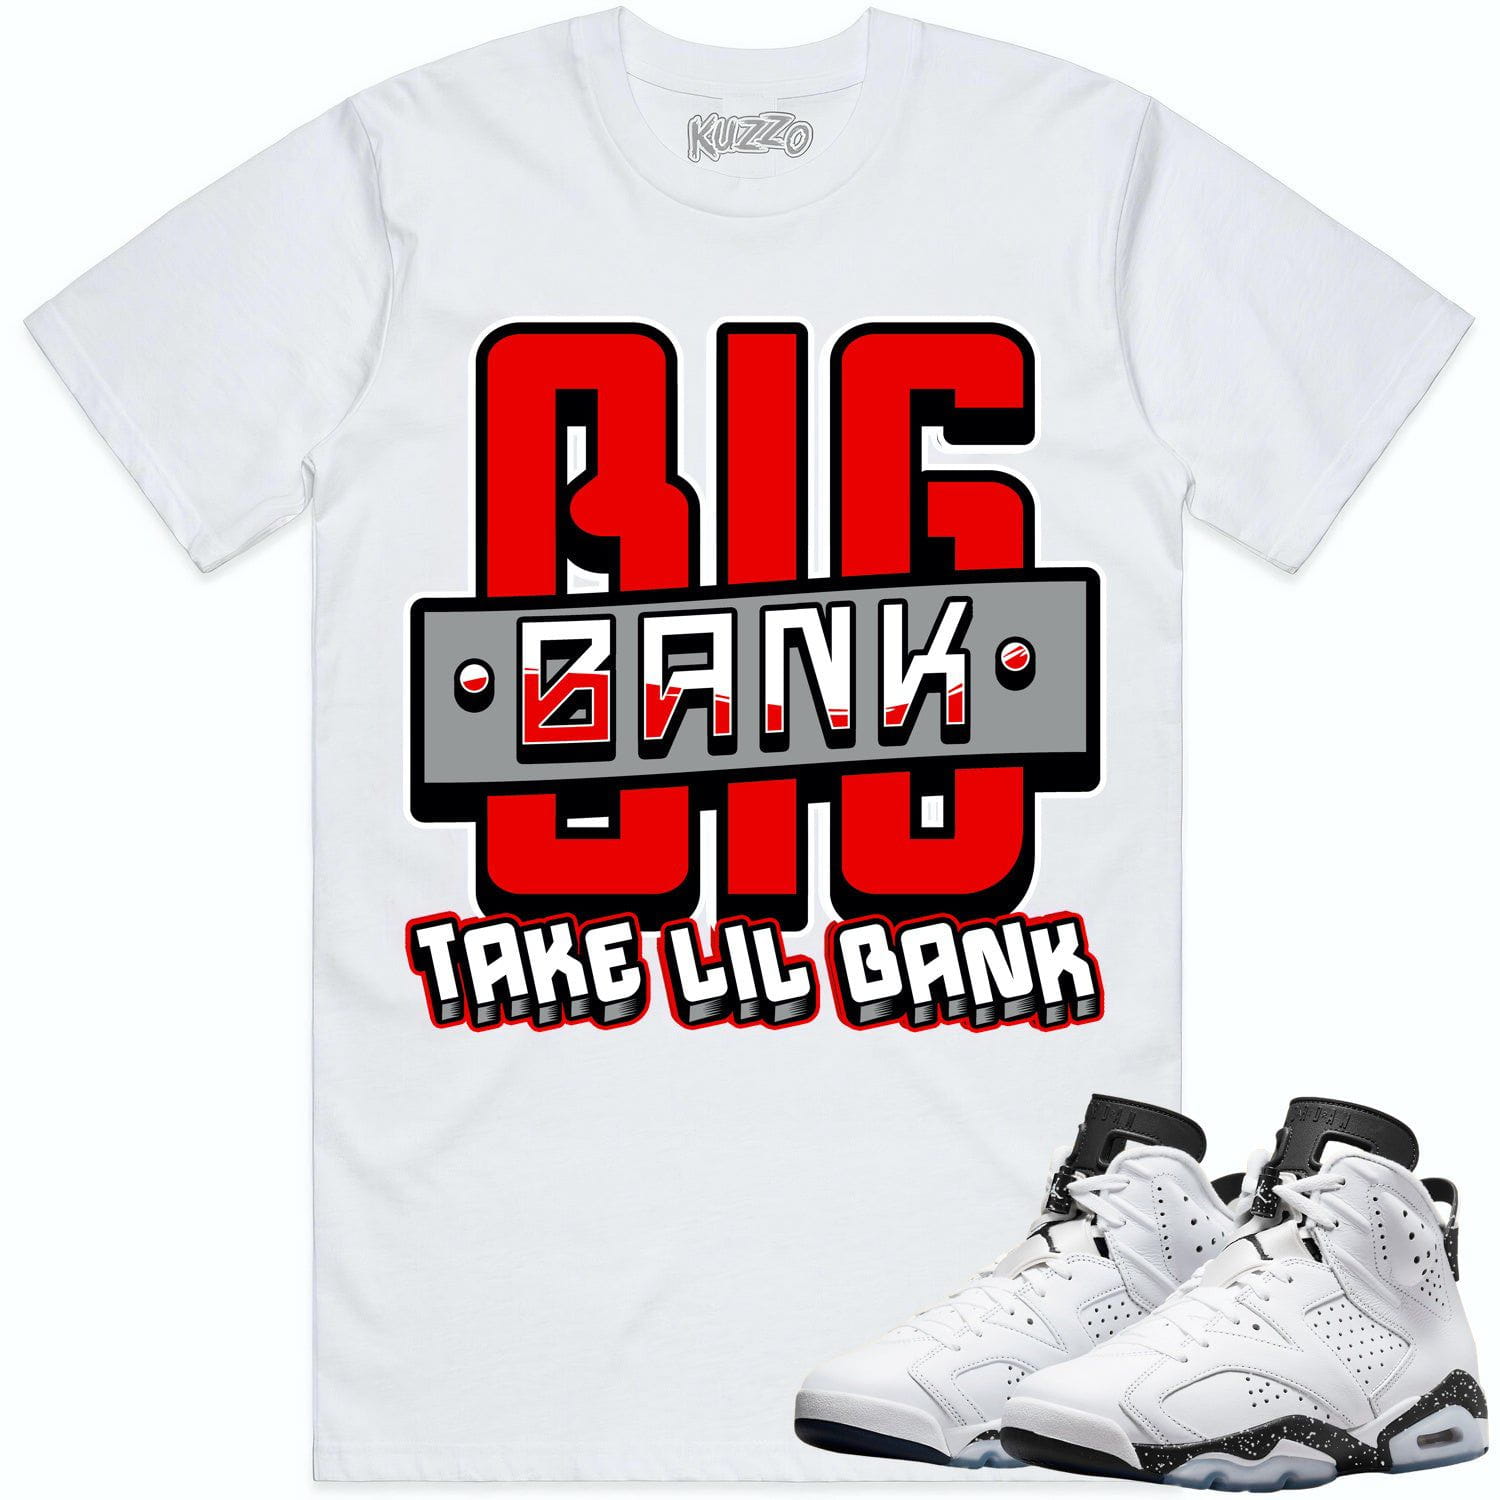 Oreo 6s Shirts - Jordan 6 Reverse Oreo 6s Sneaker Tees - Big Bank